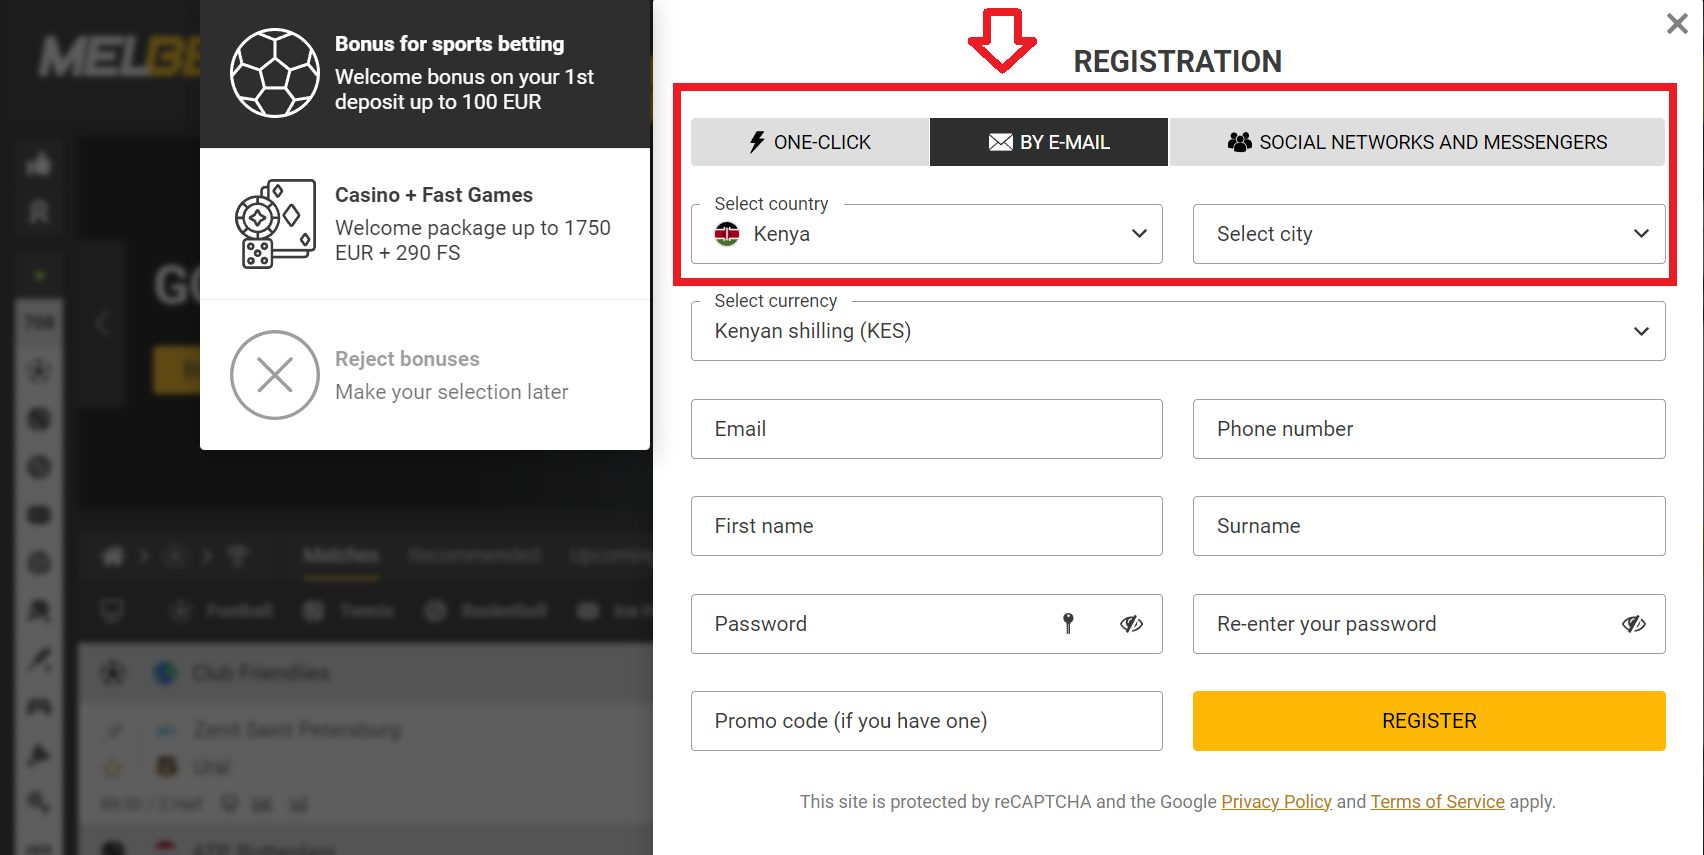 Melbet Kenya registration – How to sign up using email?